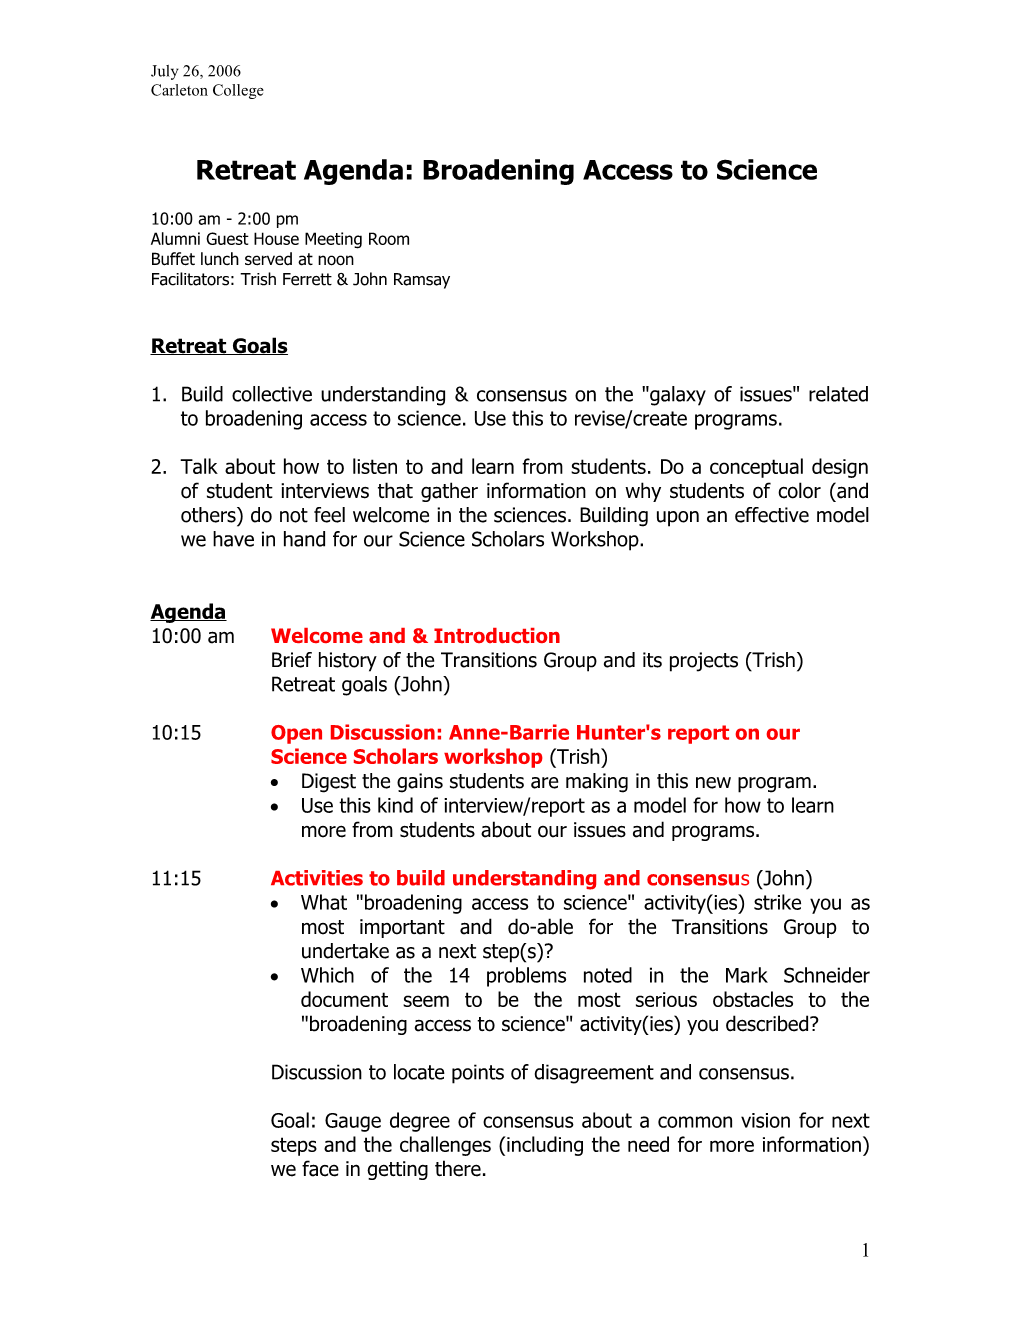 Broadening Access Retreat: Agenda